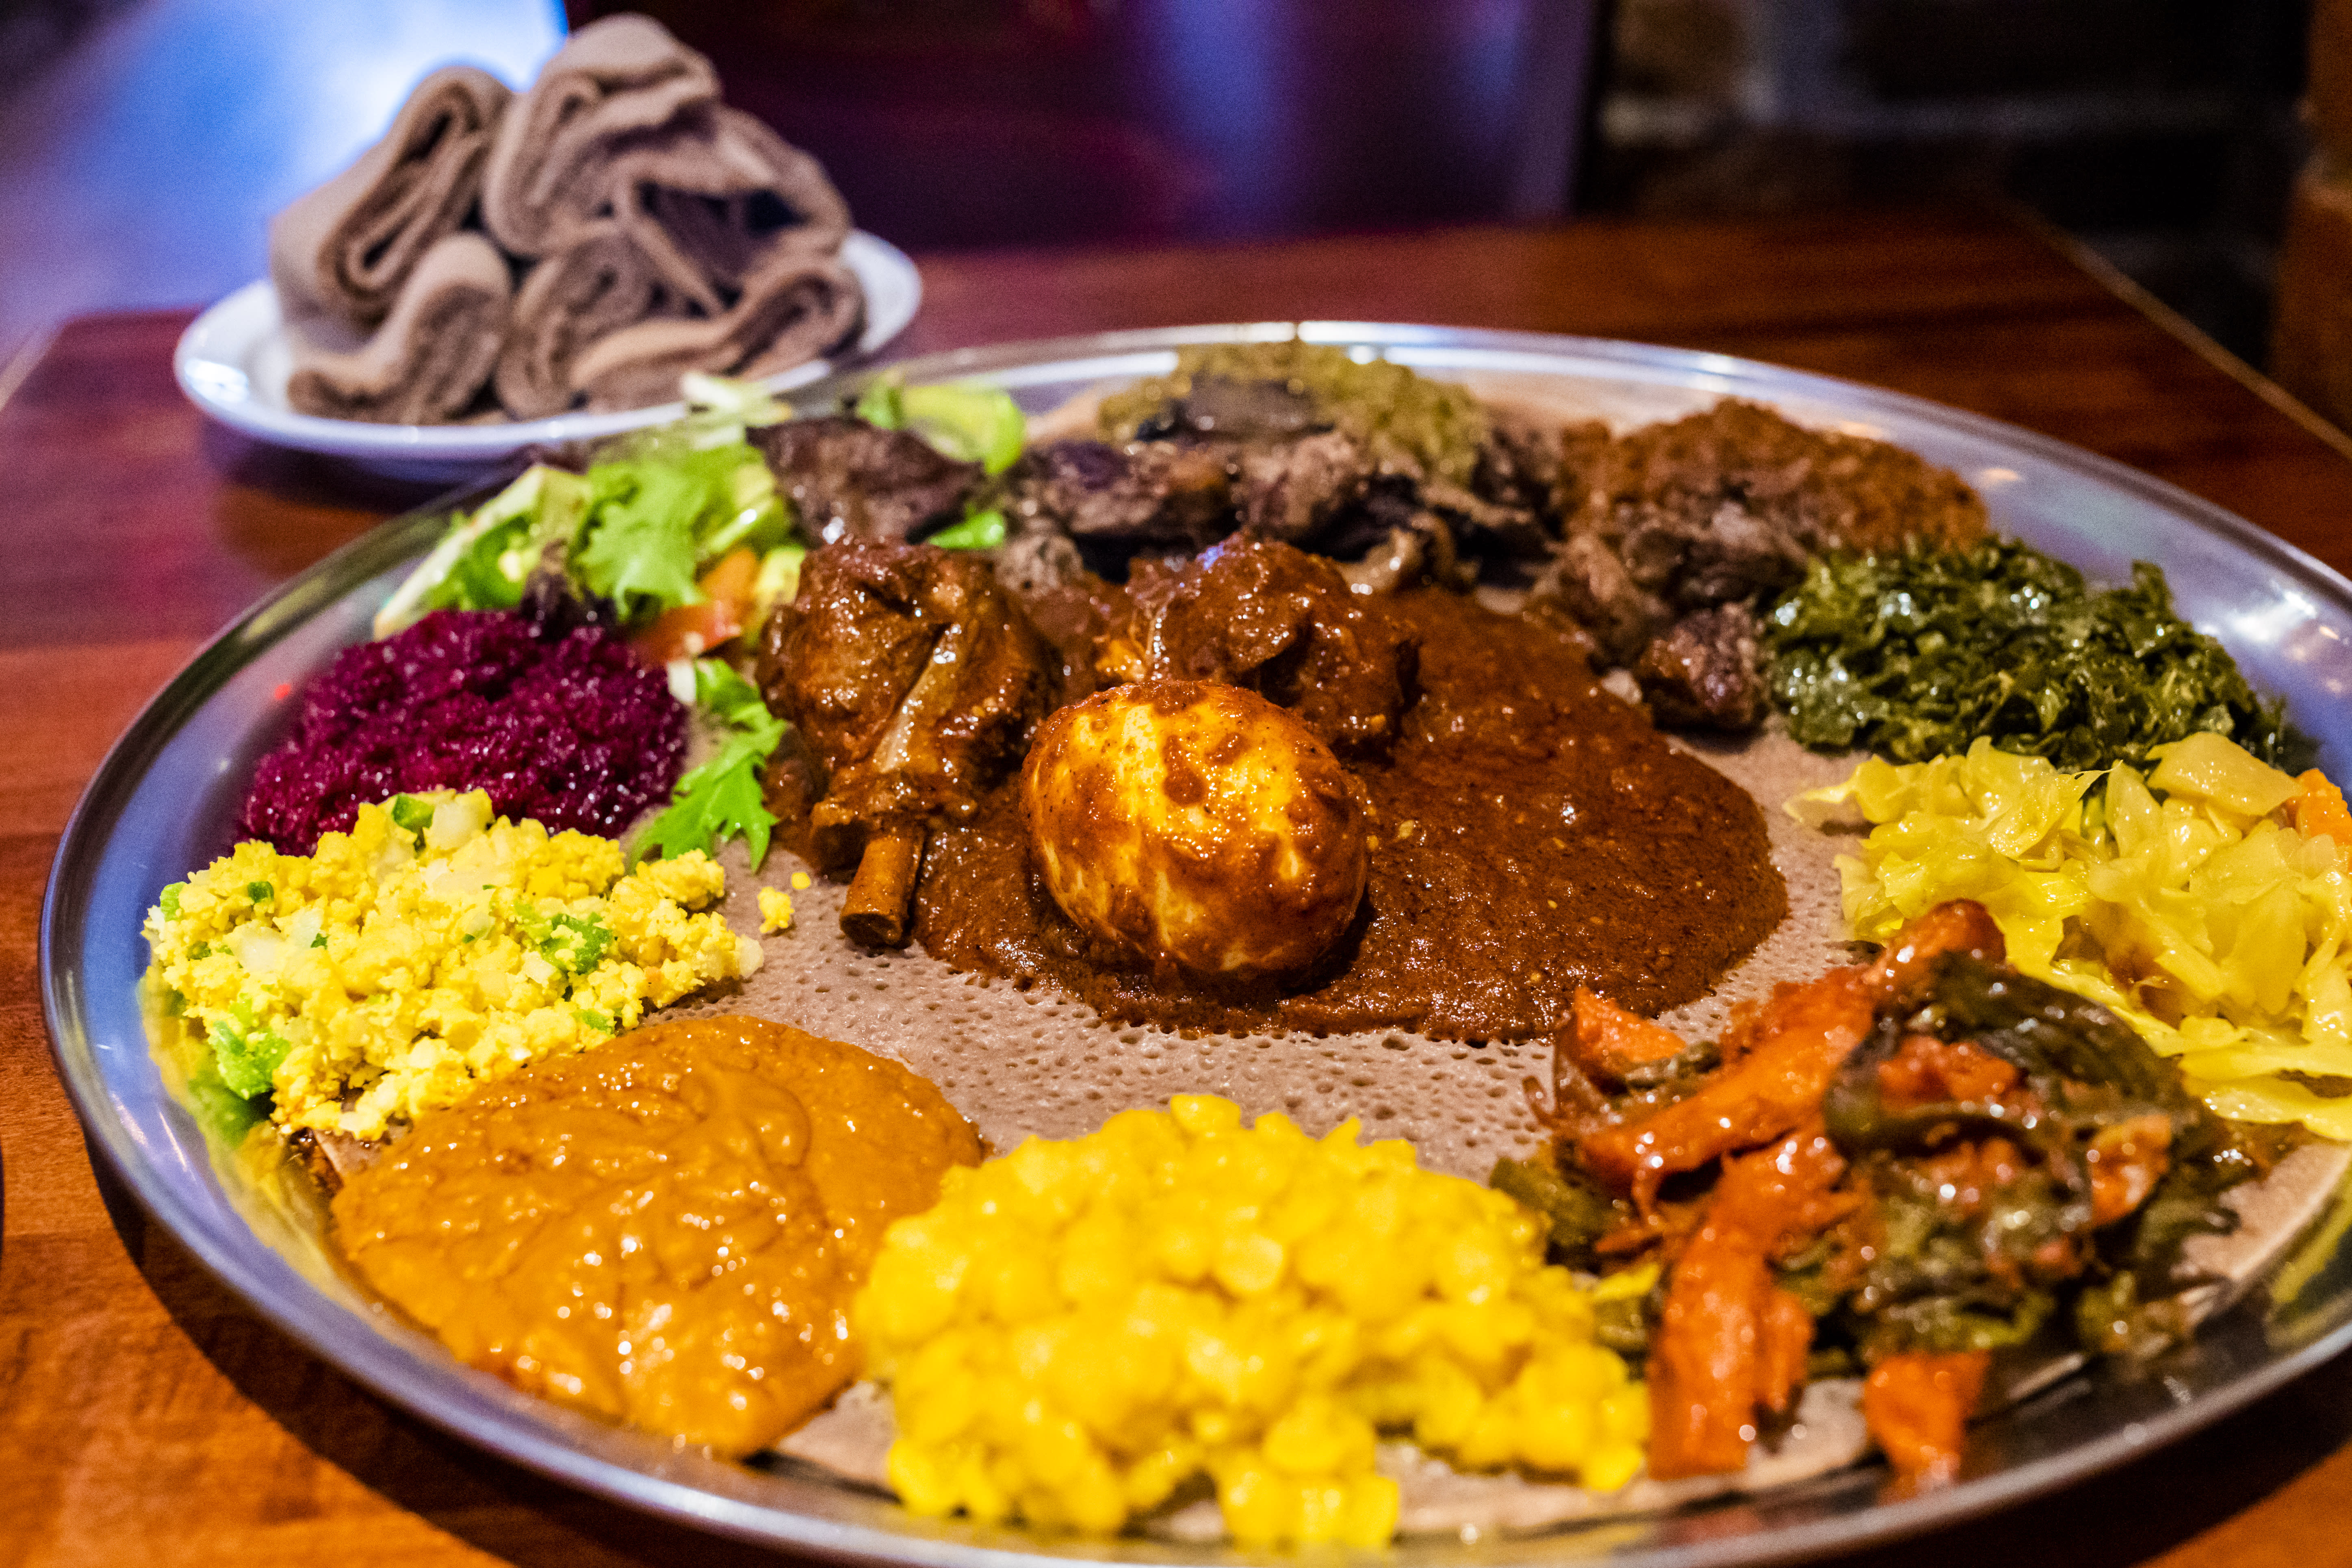 Chercher Ethiopian Restaurant Review - Shaw - Washington DC - The  Infatuation